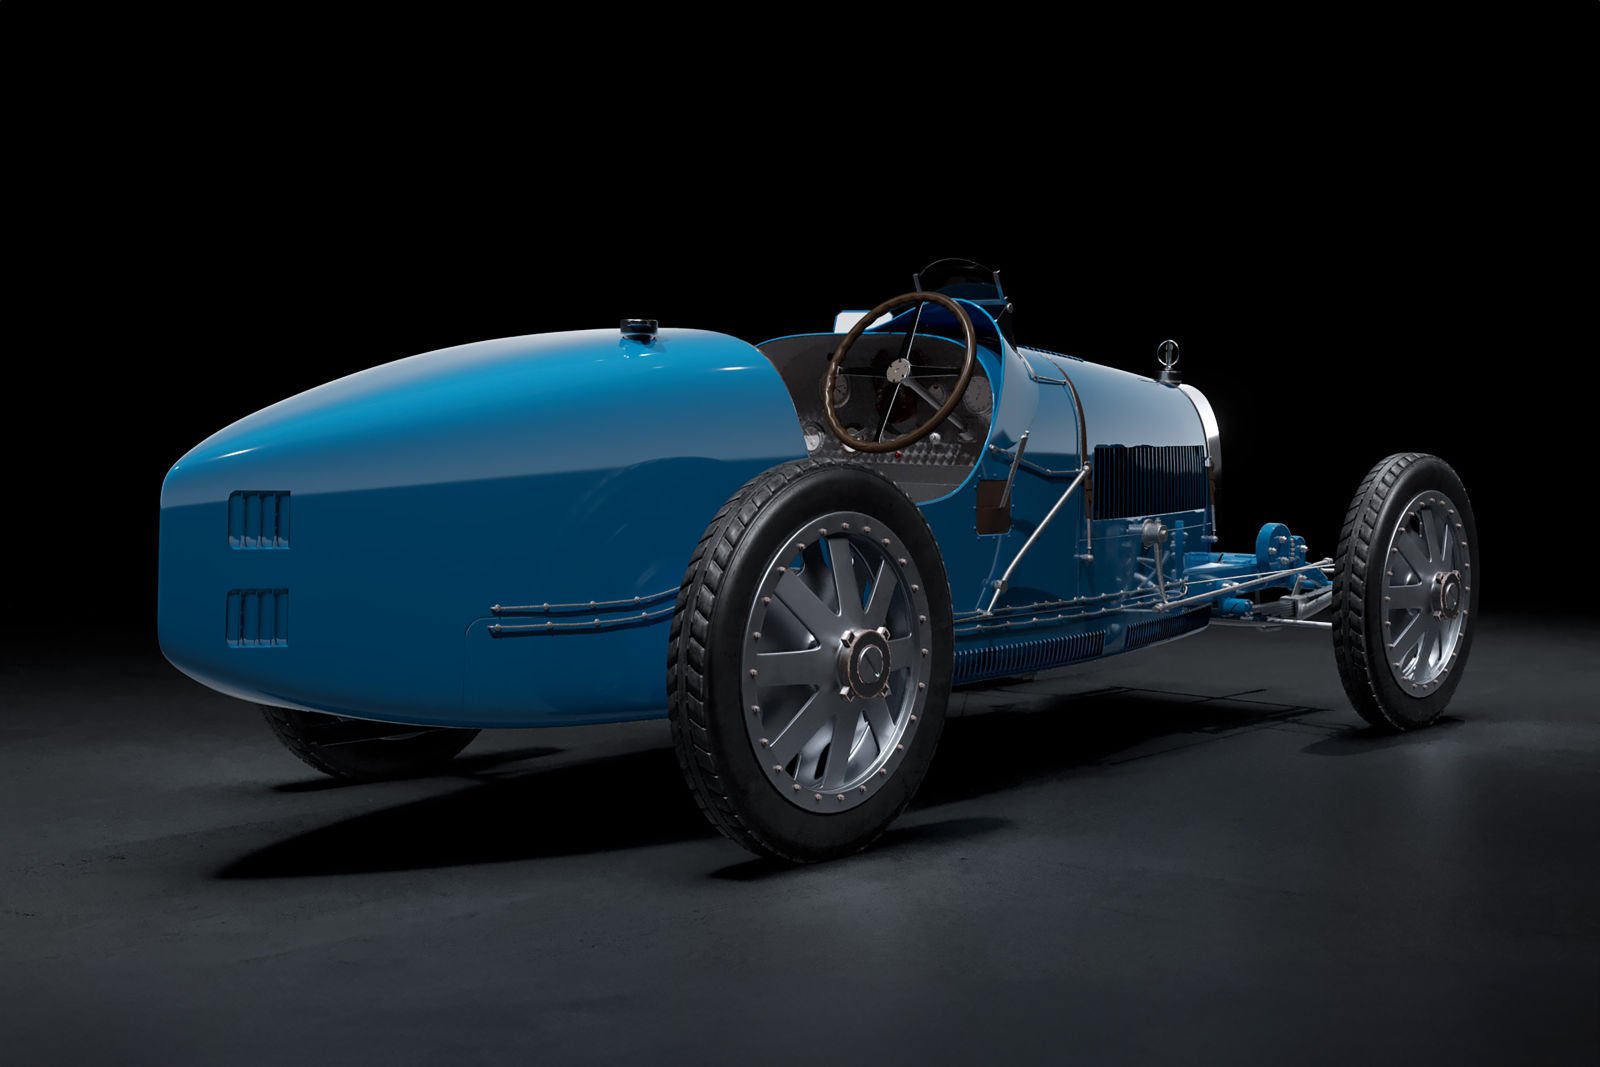 04 BUGATTI_Type 35 Centenary SemanalClásico - Revista online de coches clásicos, de colección y sport - bugatti